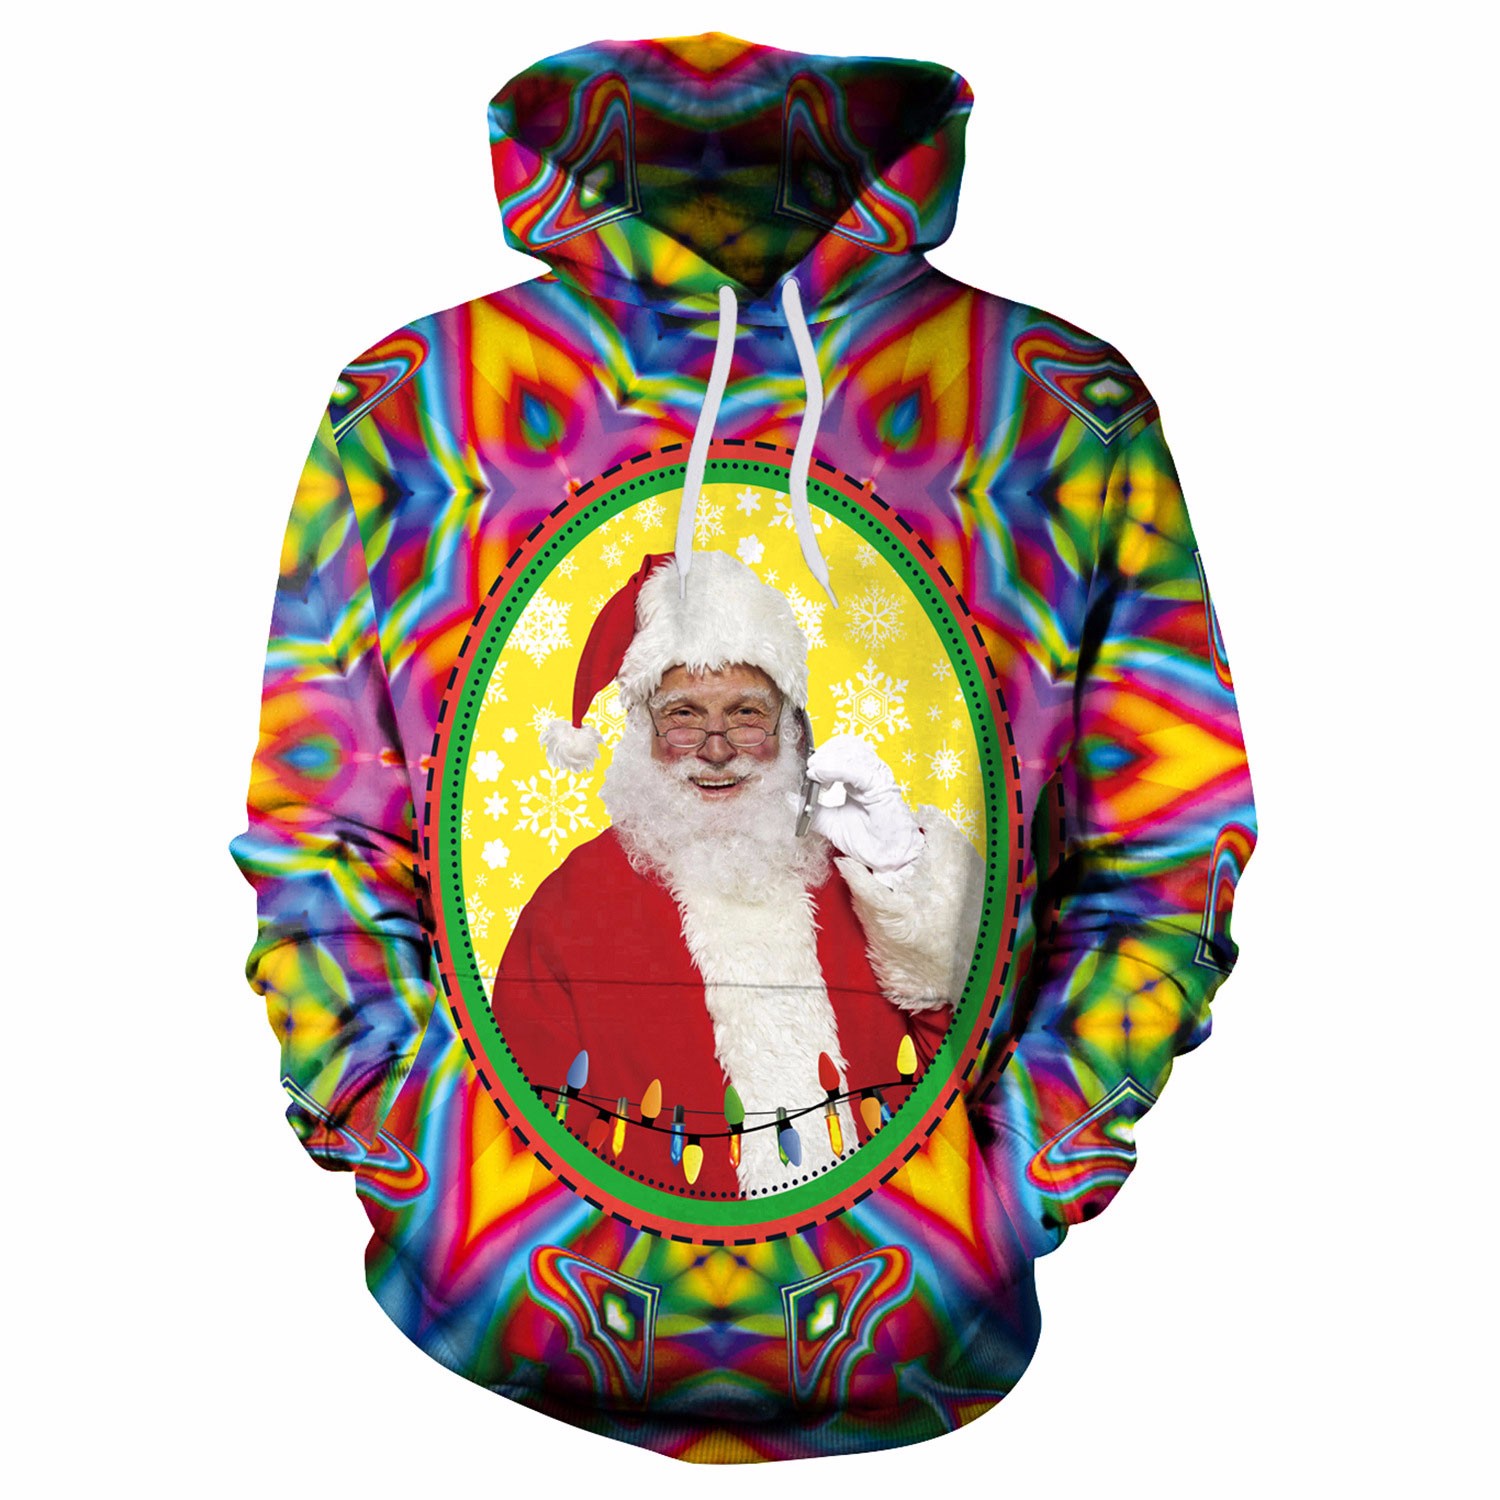 Santa Christmas sweater